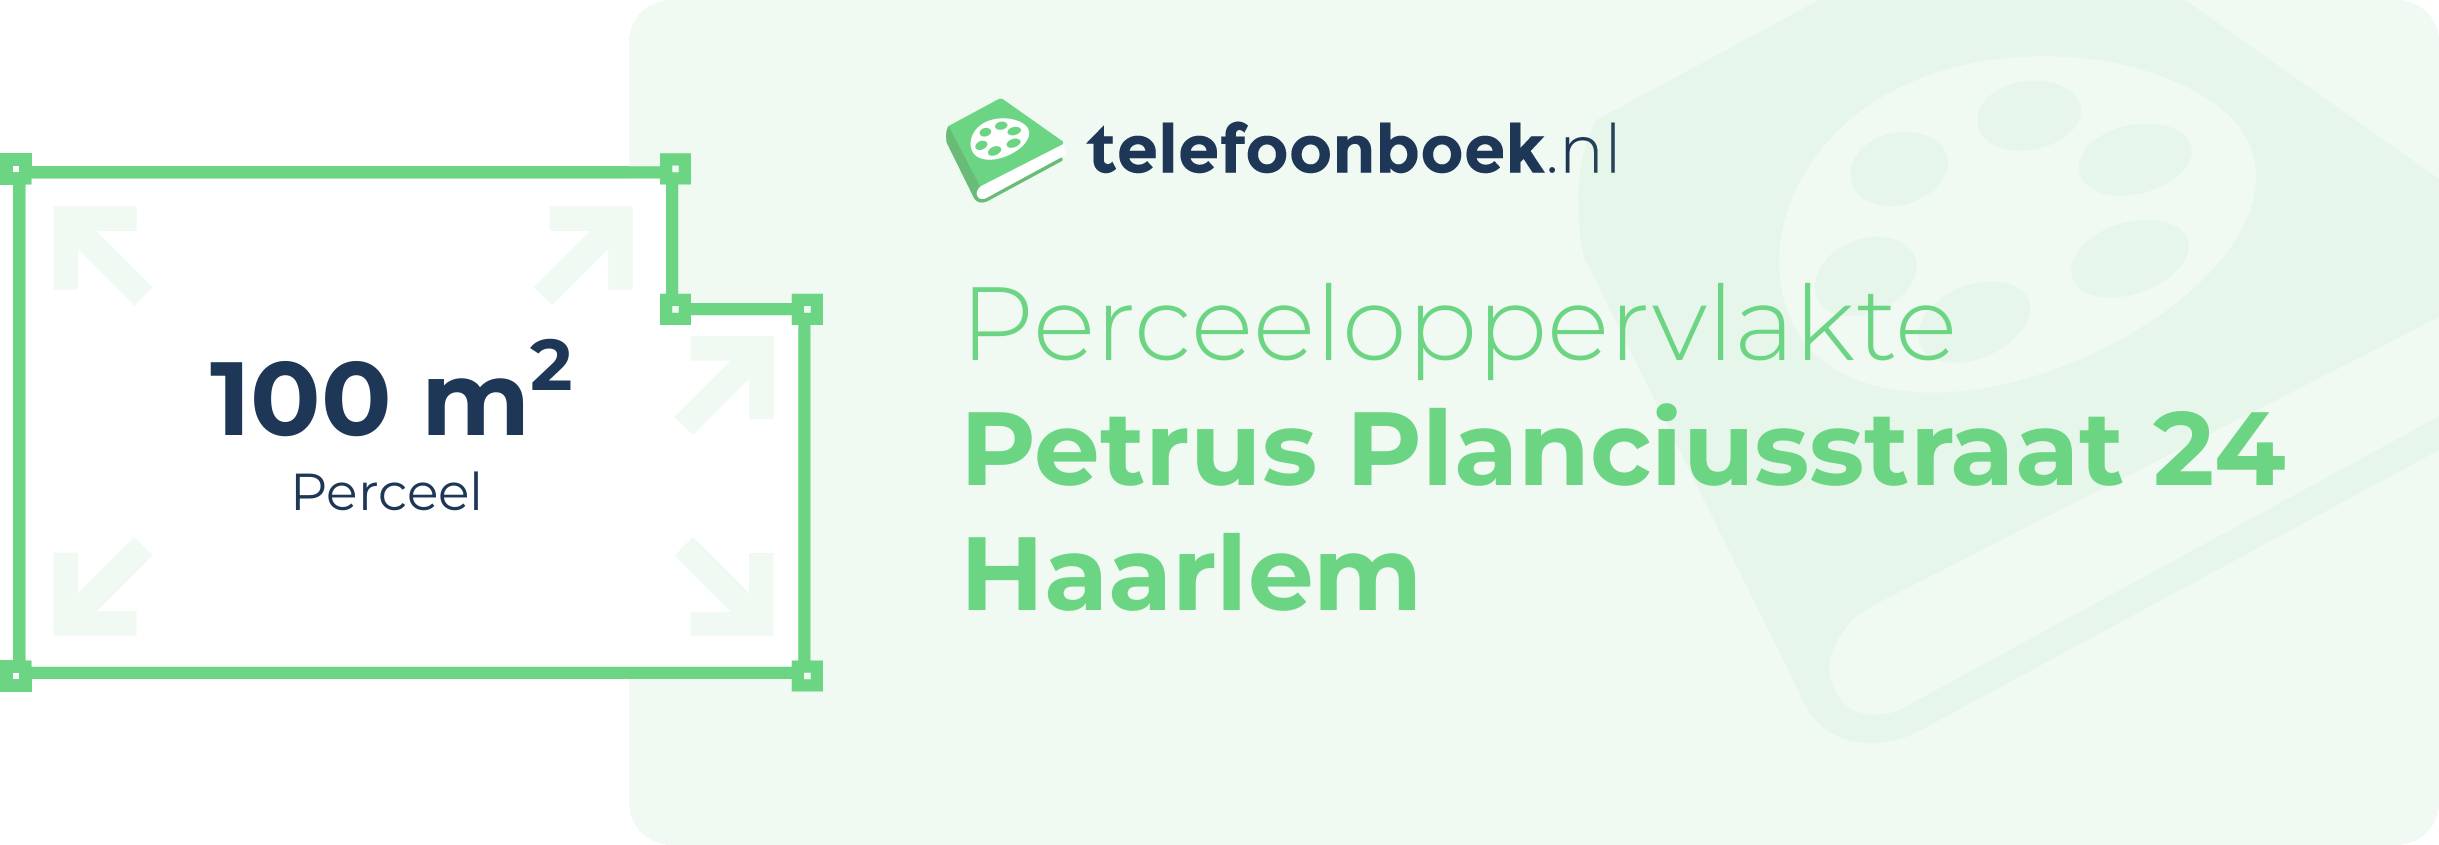 Perceeloppervlakte Petrus Planciusstraat 24 Haarlem